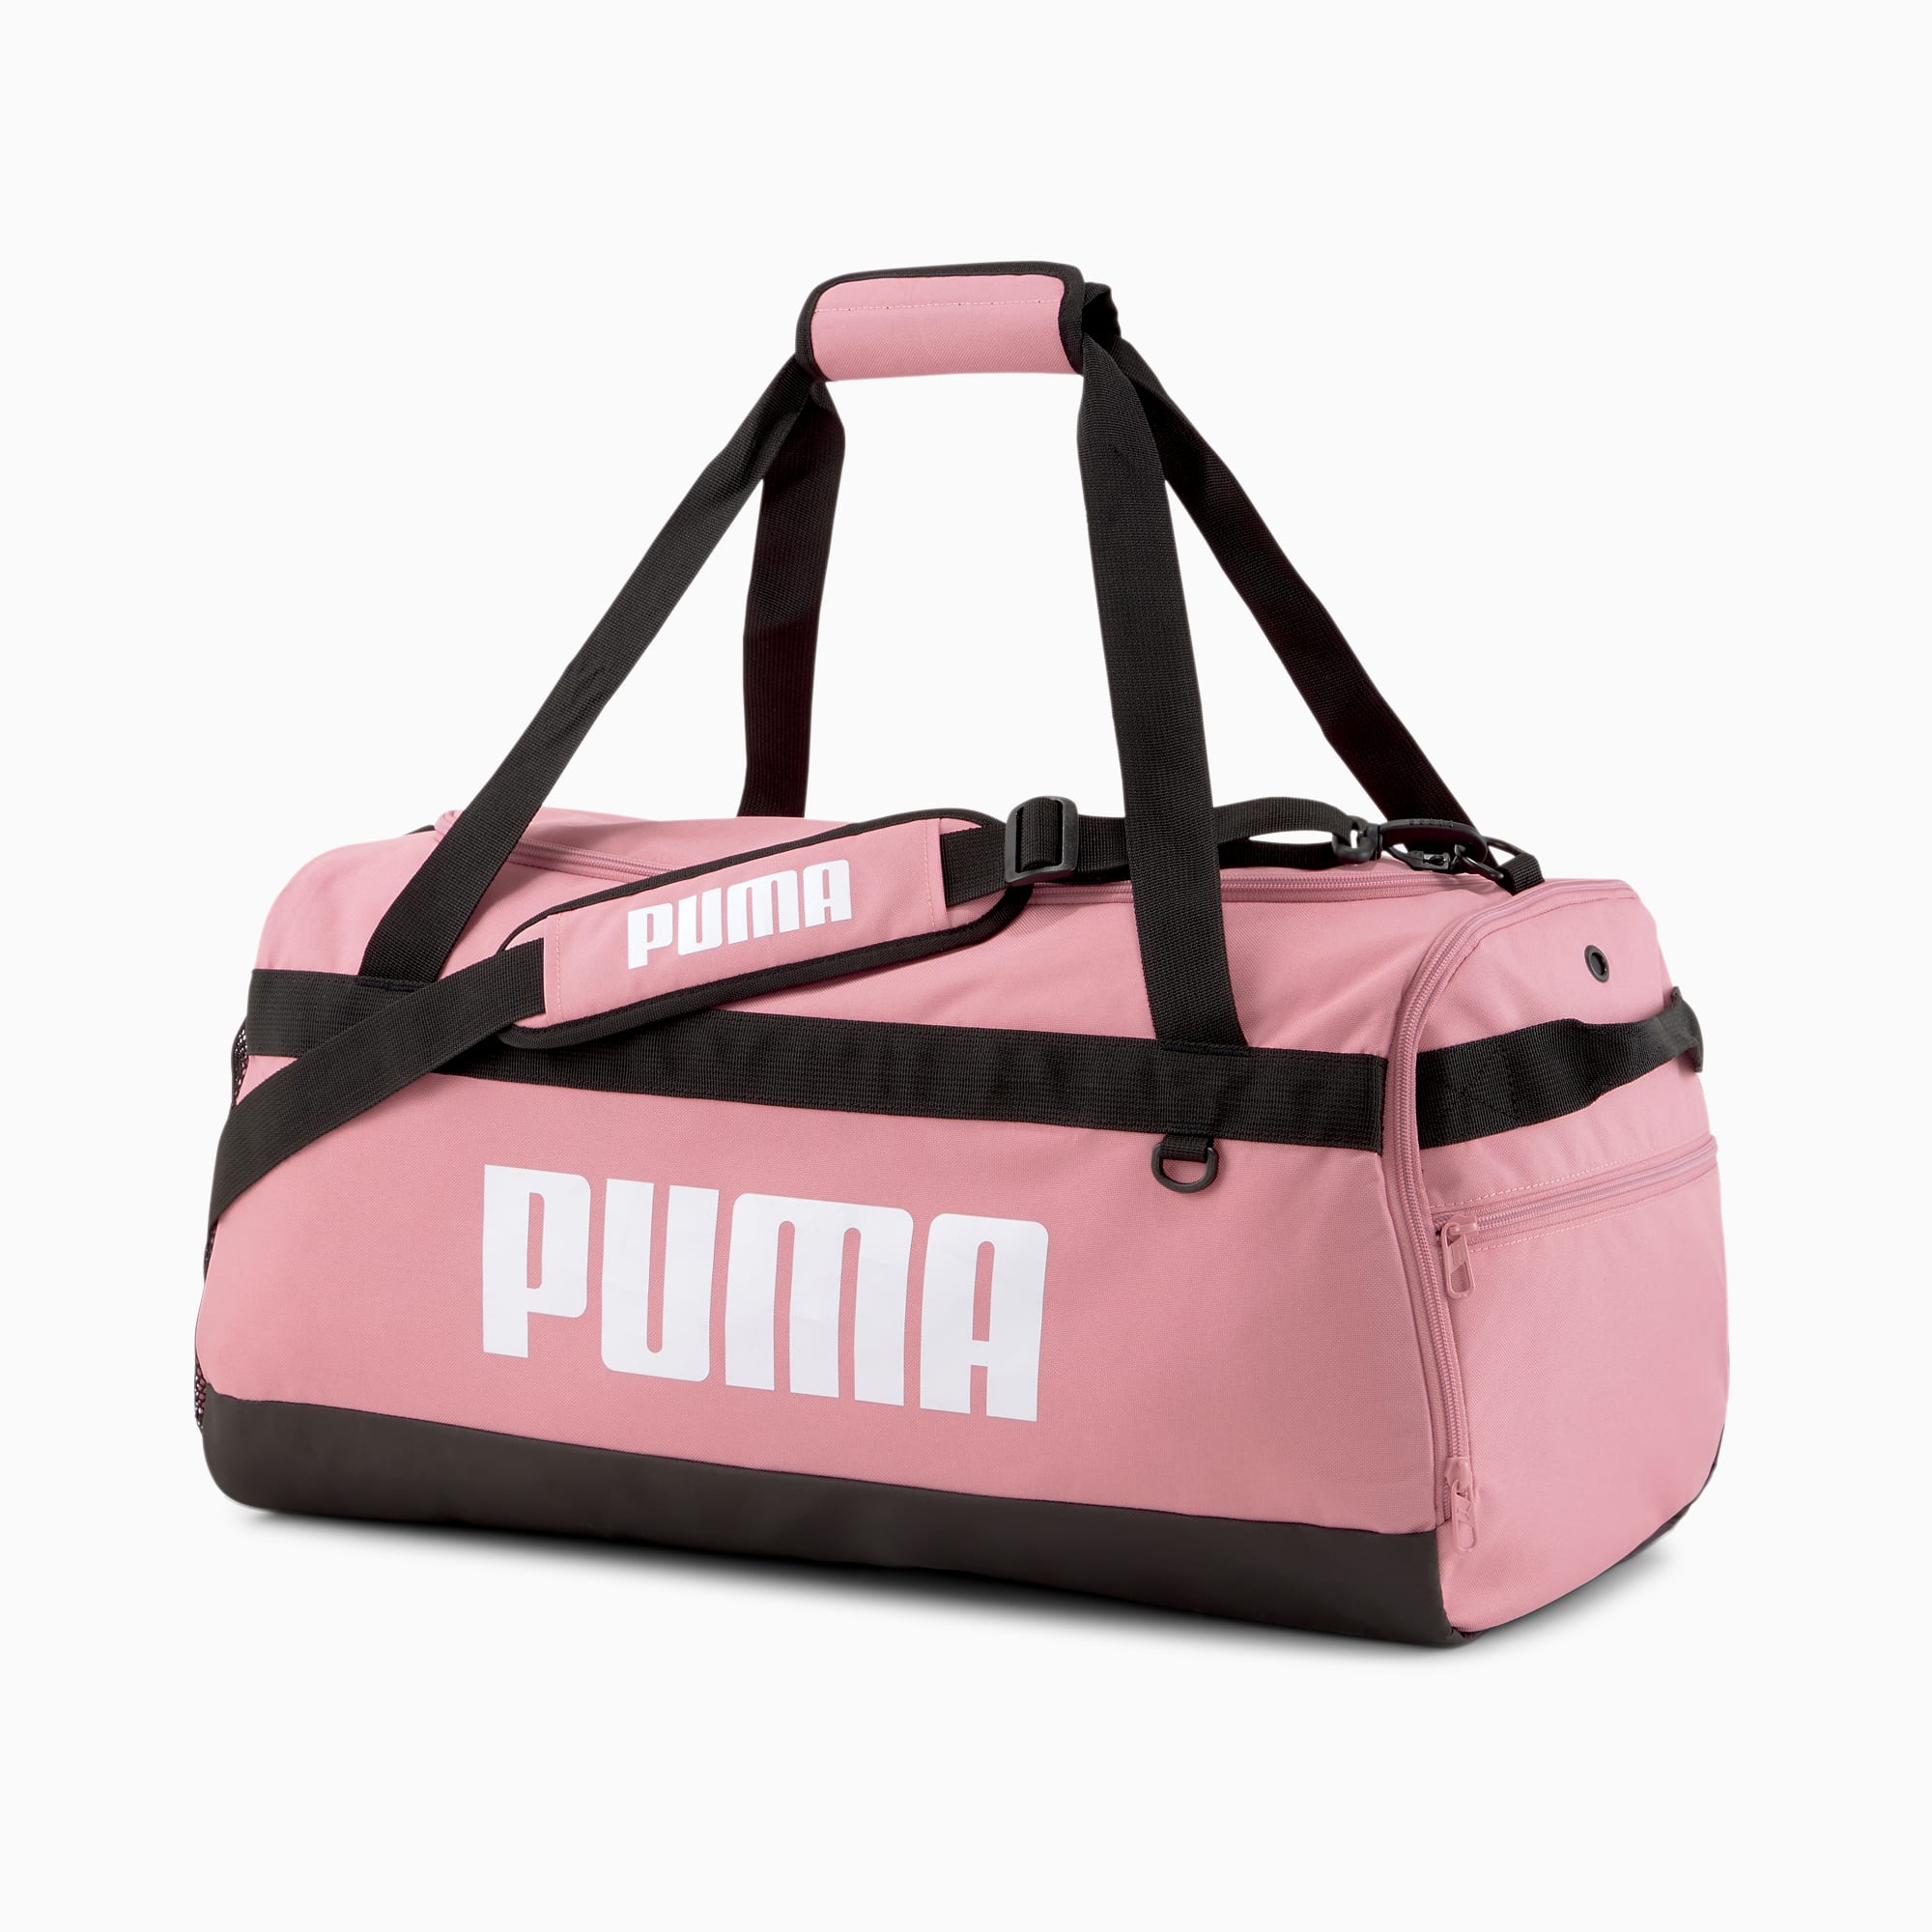 puma duffel bag pink